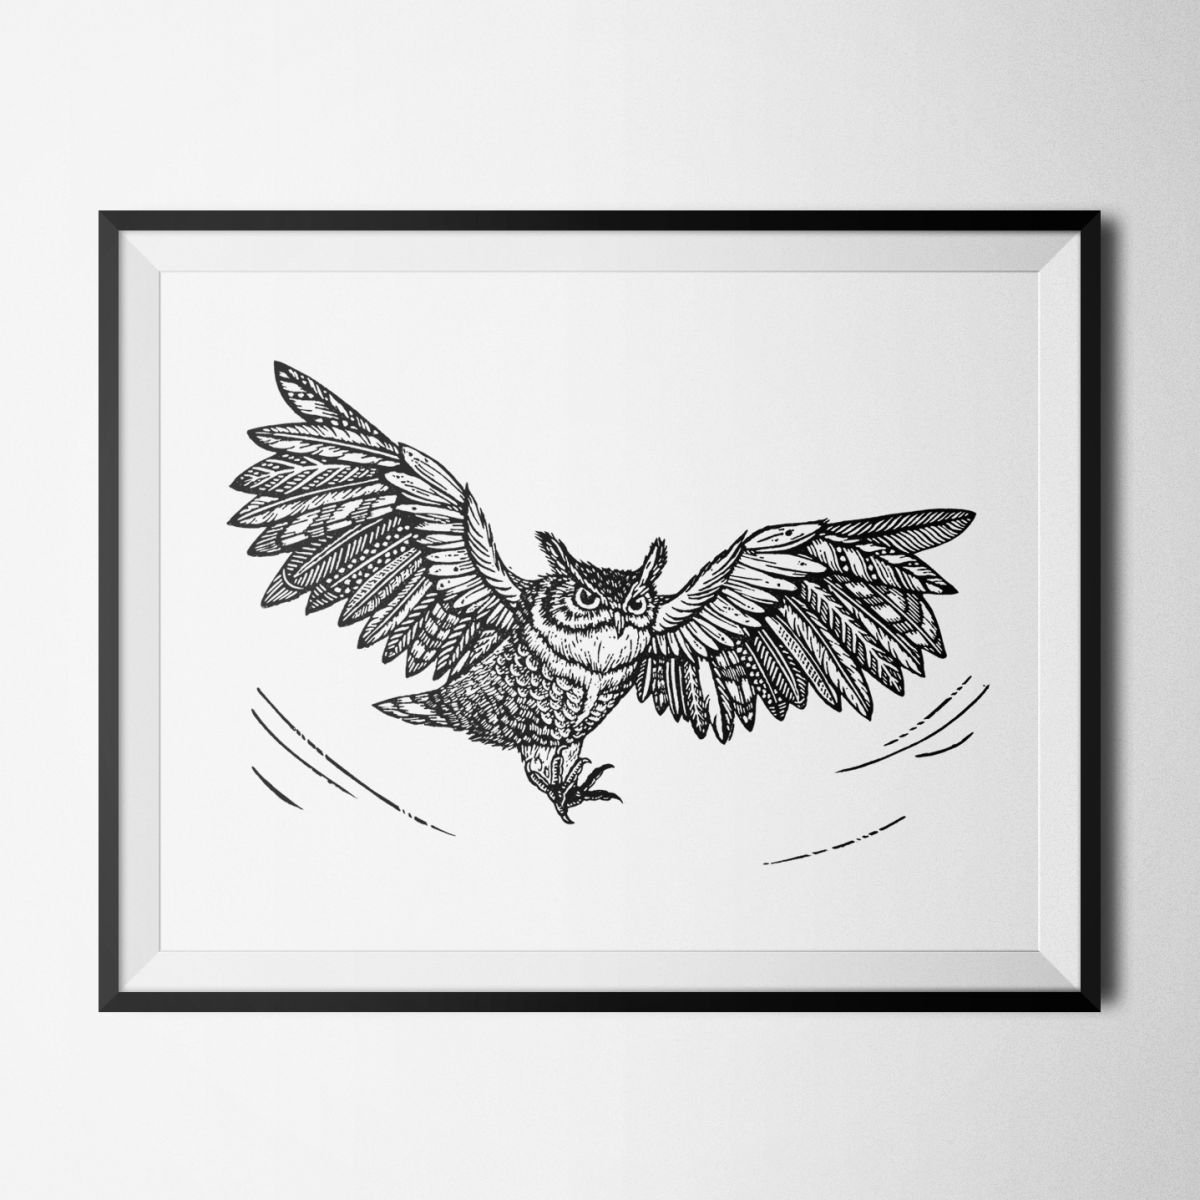 Owl by Tian Gan